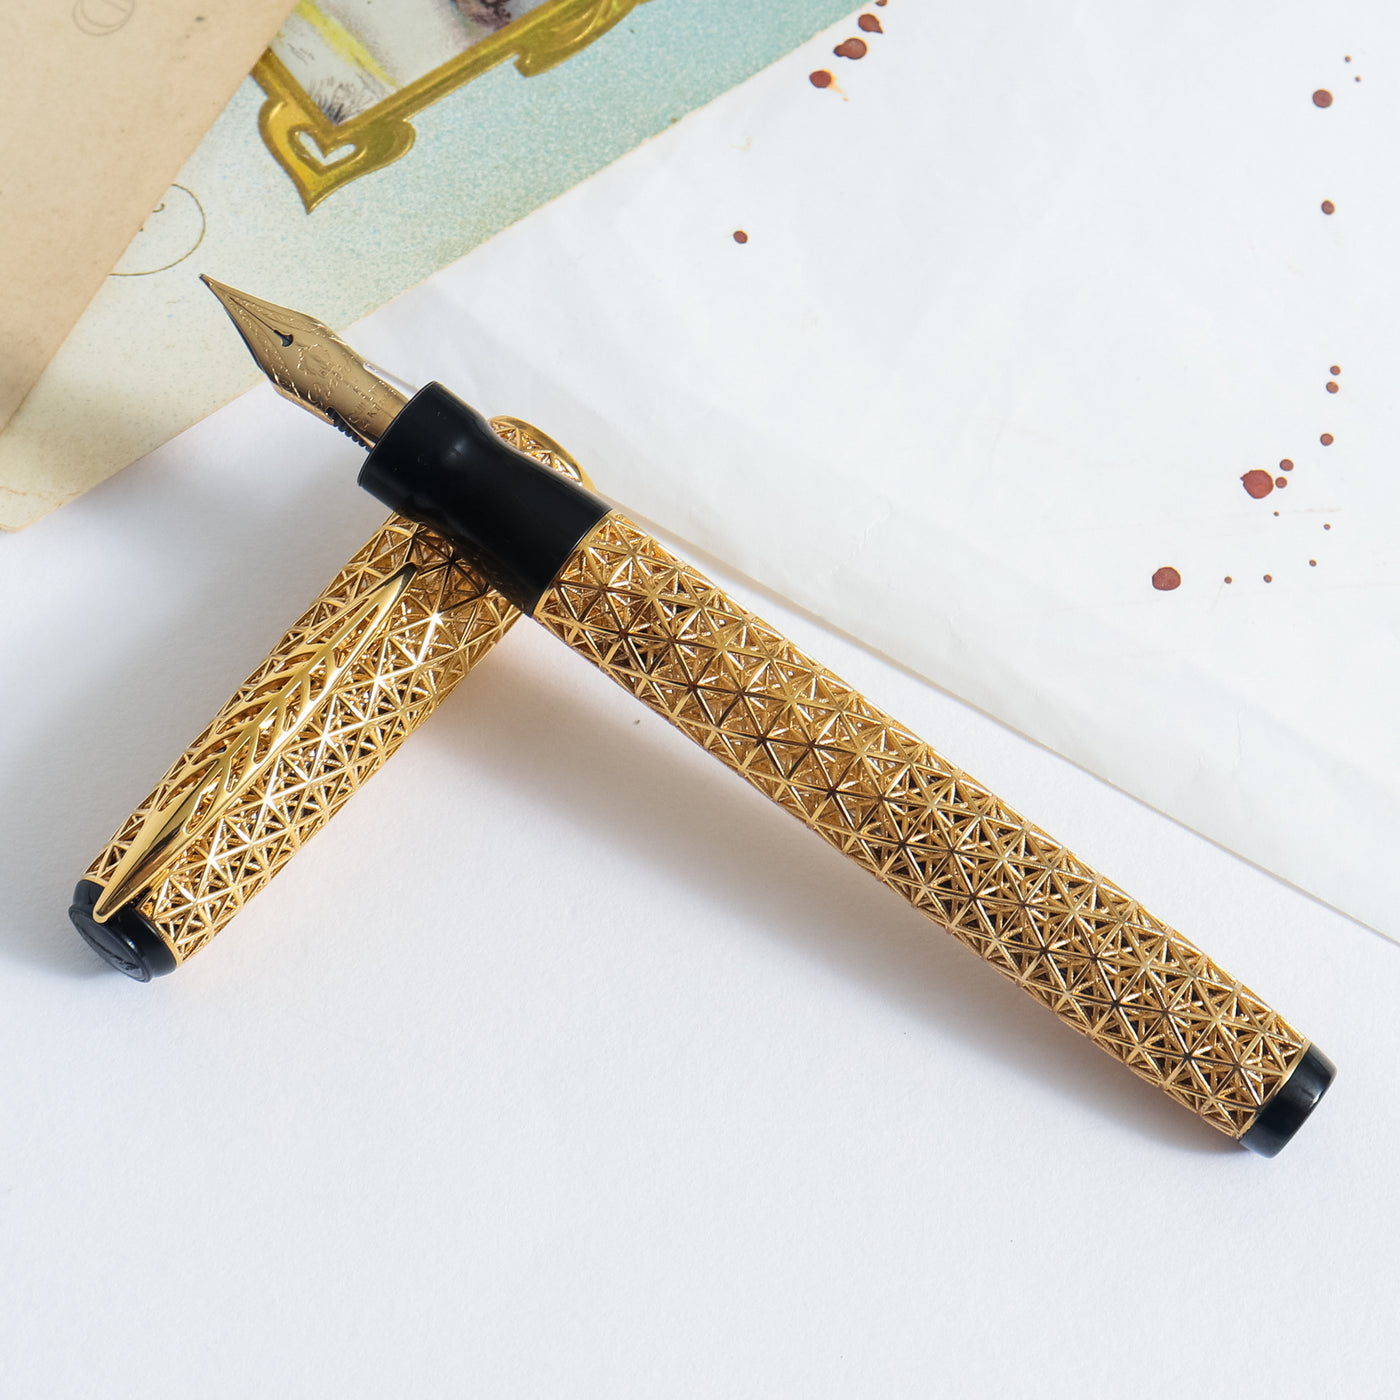 Pineider Psycho 18k Solid Gold Fountain Pen Set - 1/1 Piece Unique